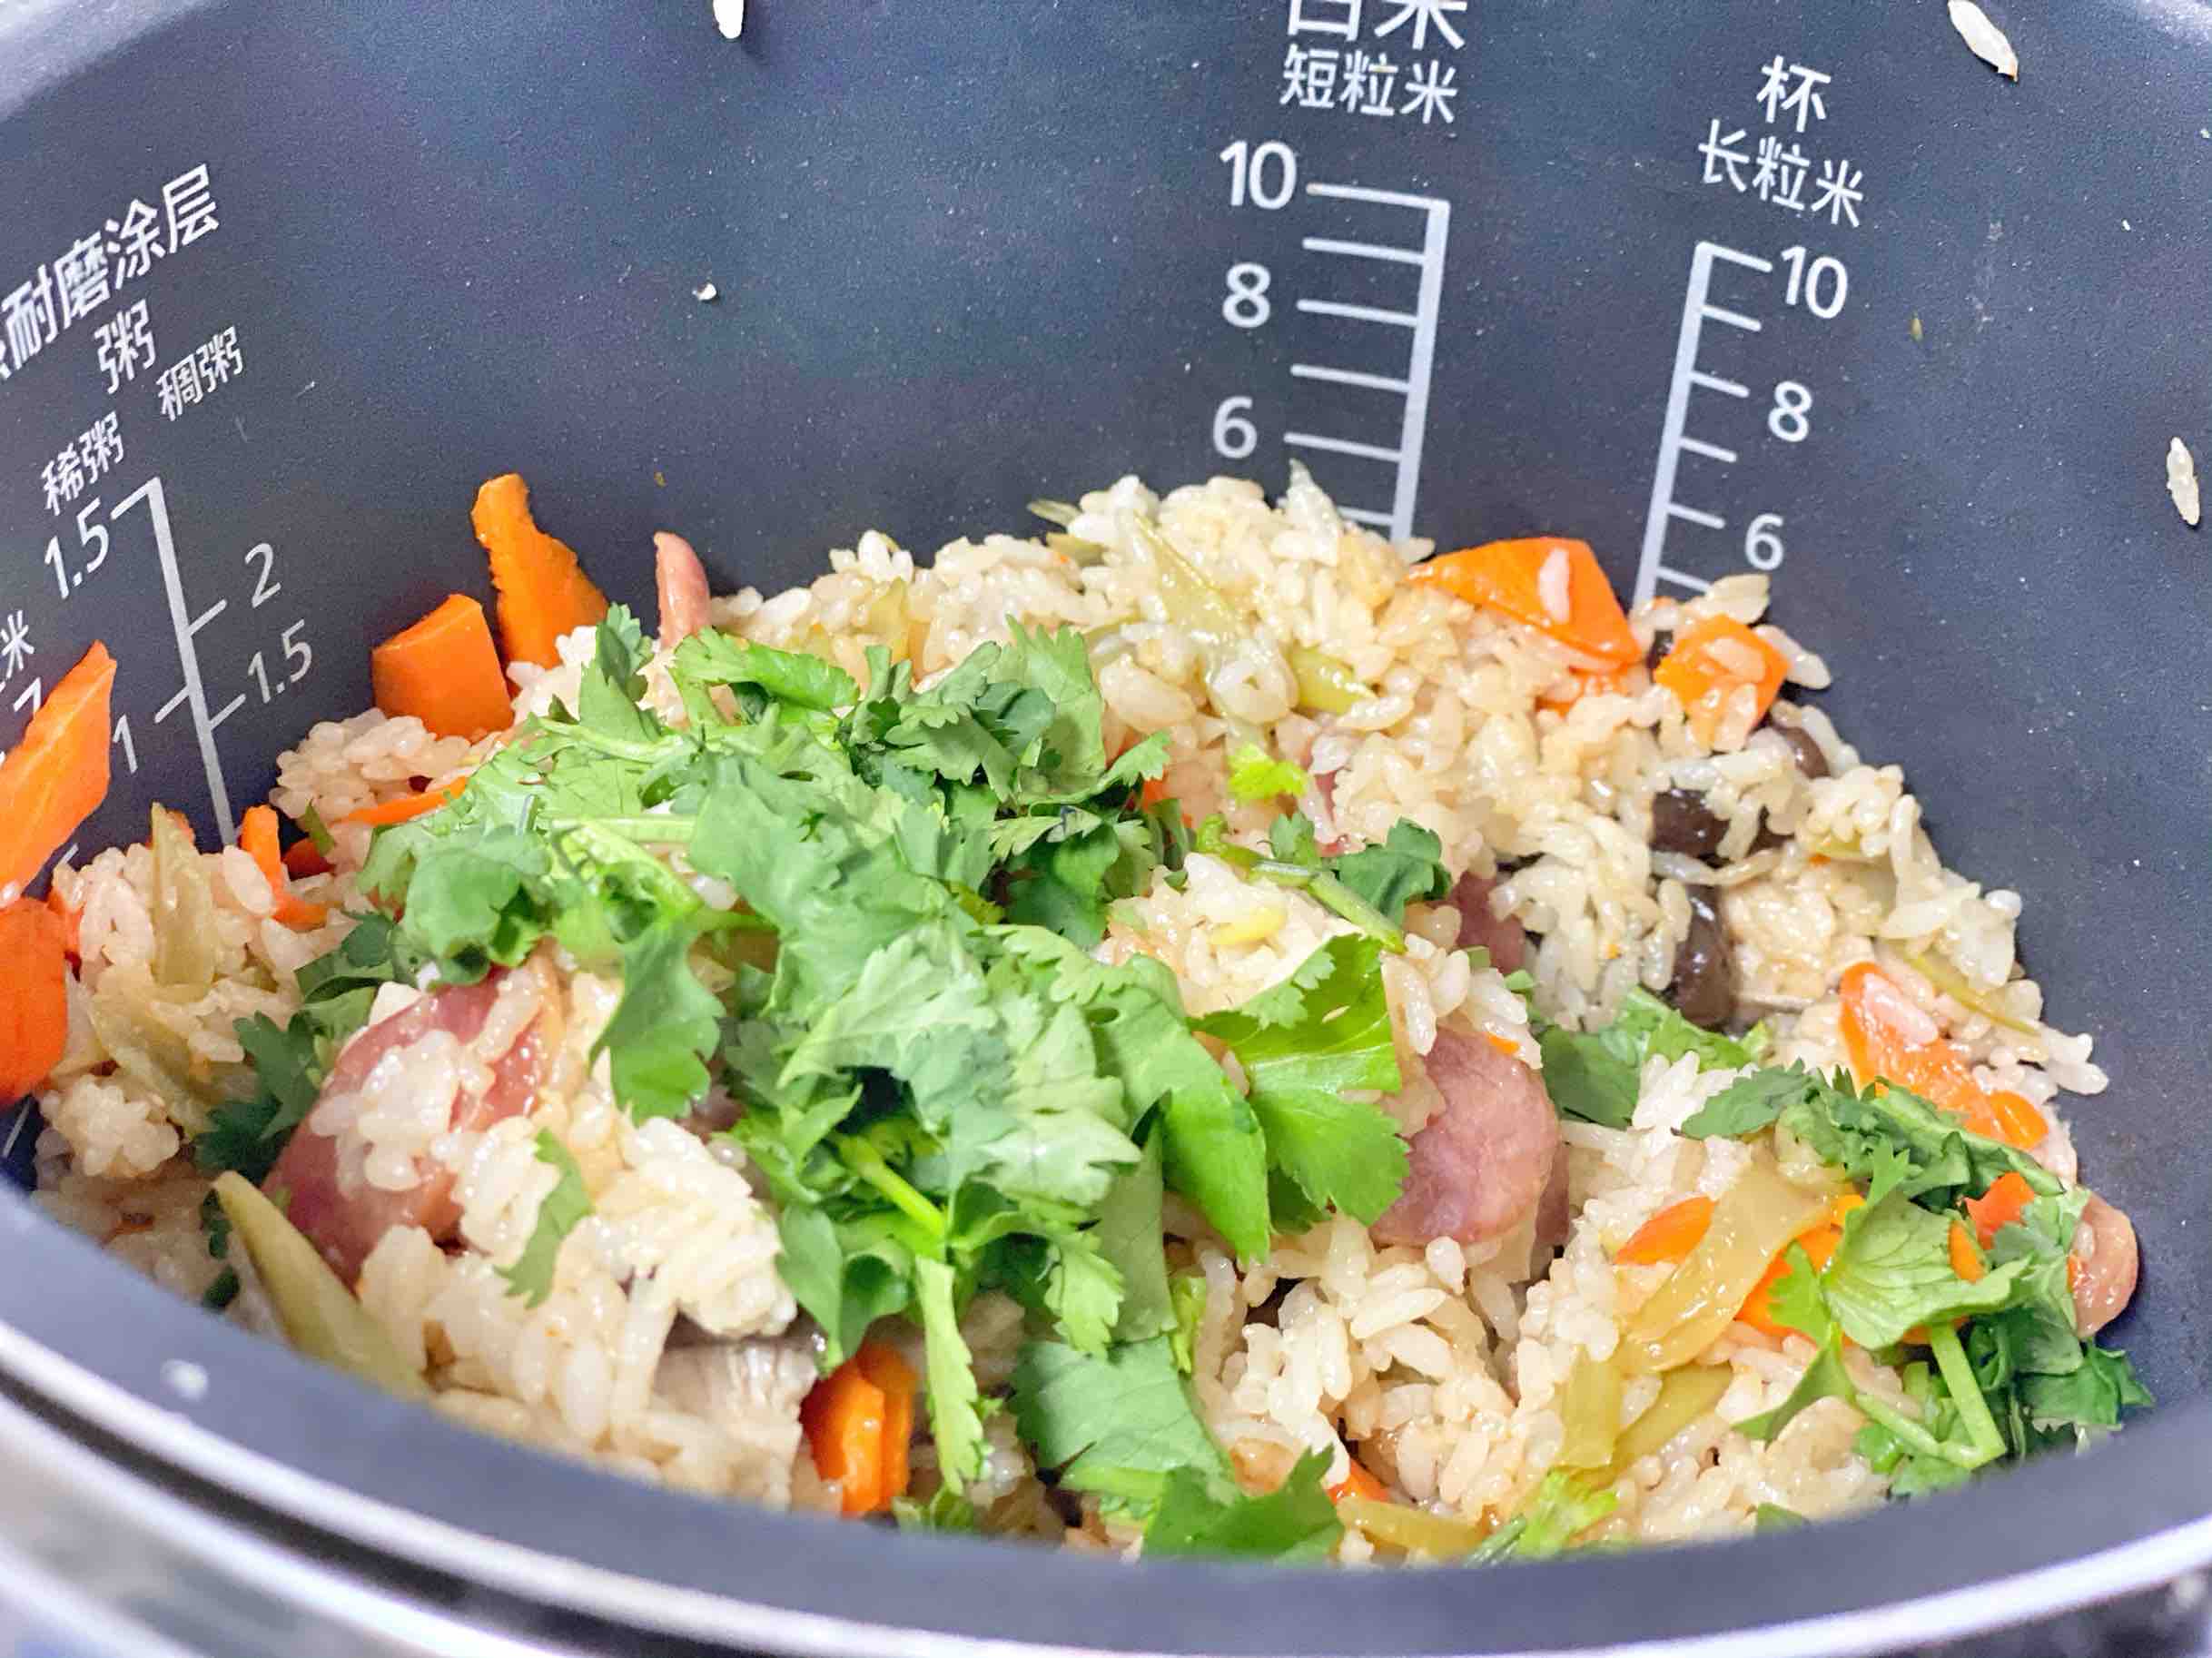 Kuaishou Braised Rice: Savory Braised Rice recipe